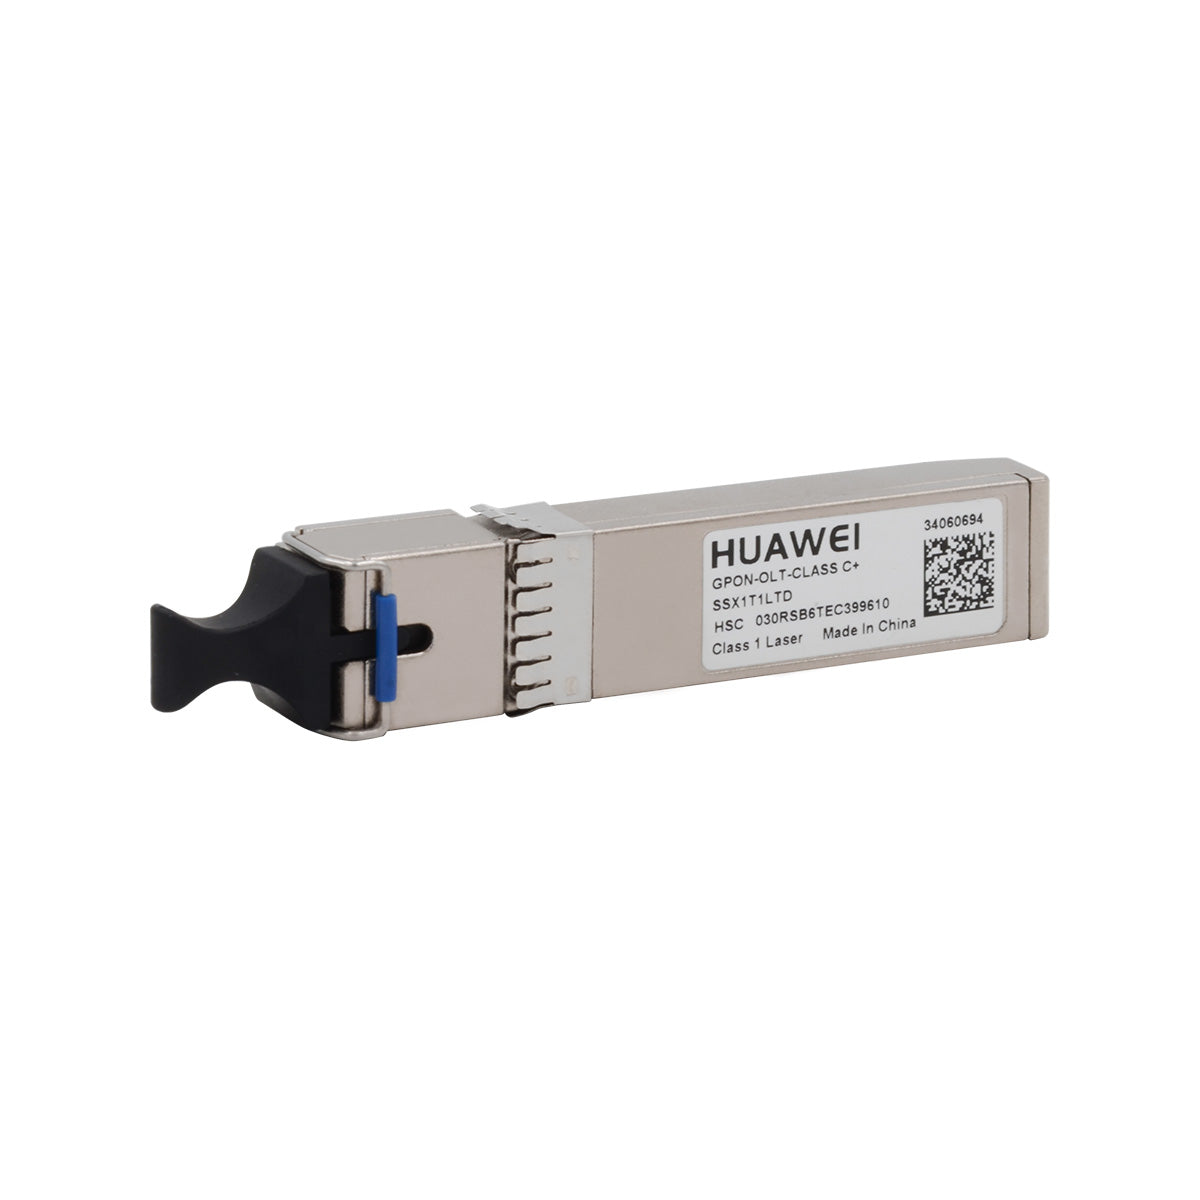 Huawei Original SSX1T1LTD, HSC, GPON-OLT-Class C+ SFP for Huawei GPON Board, 34060694